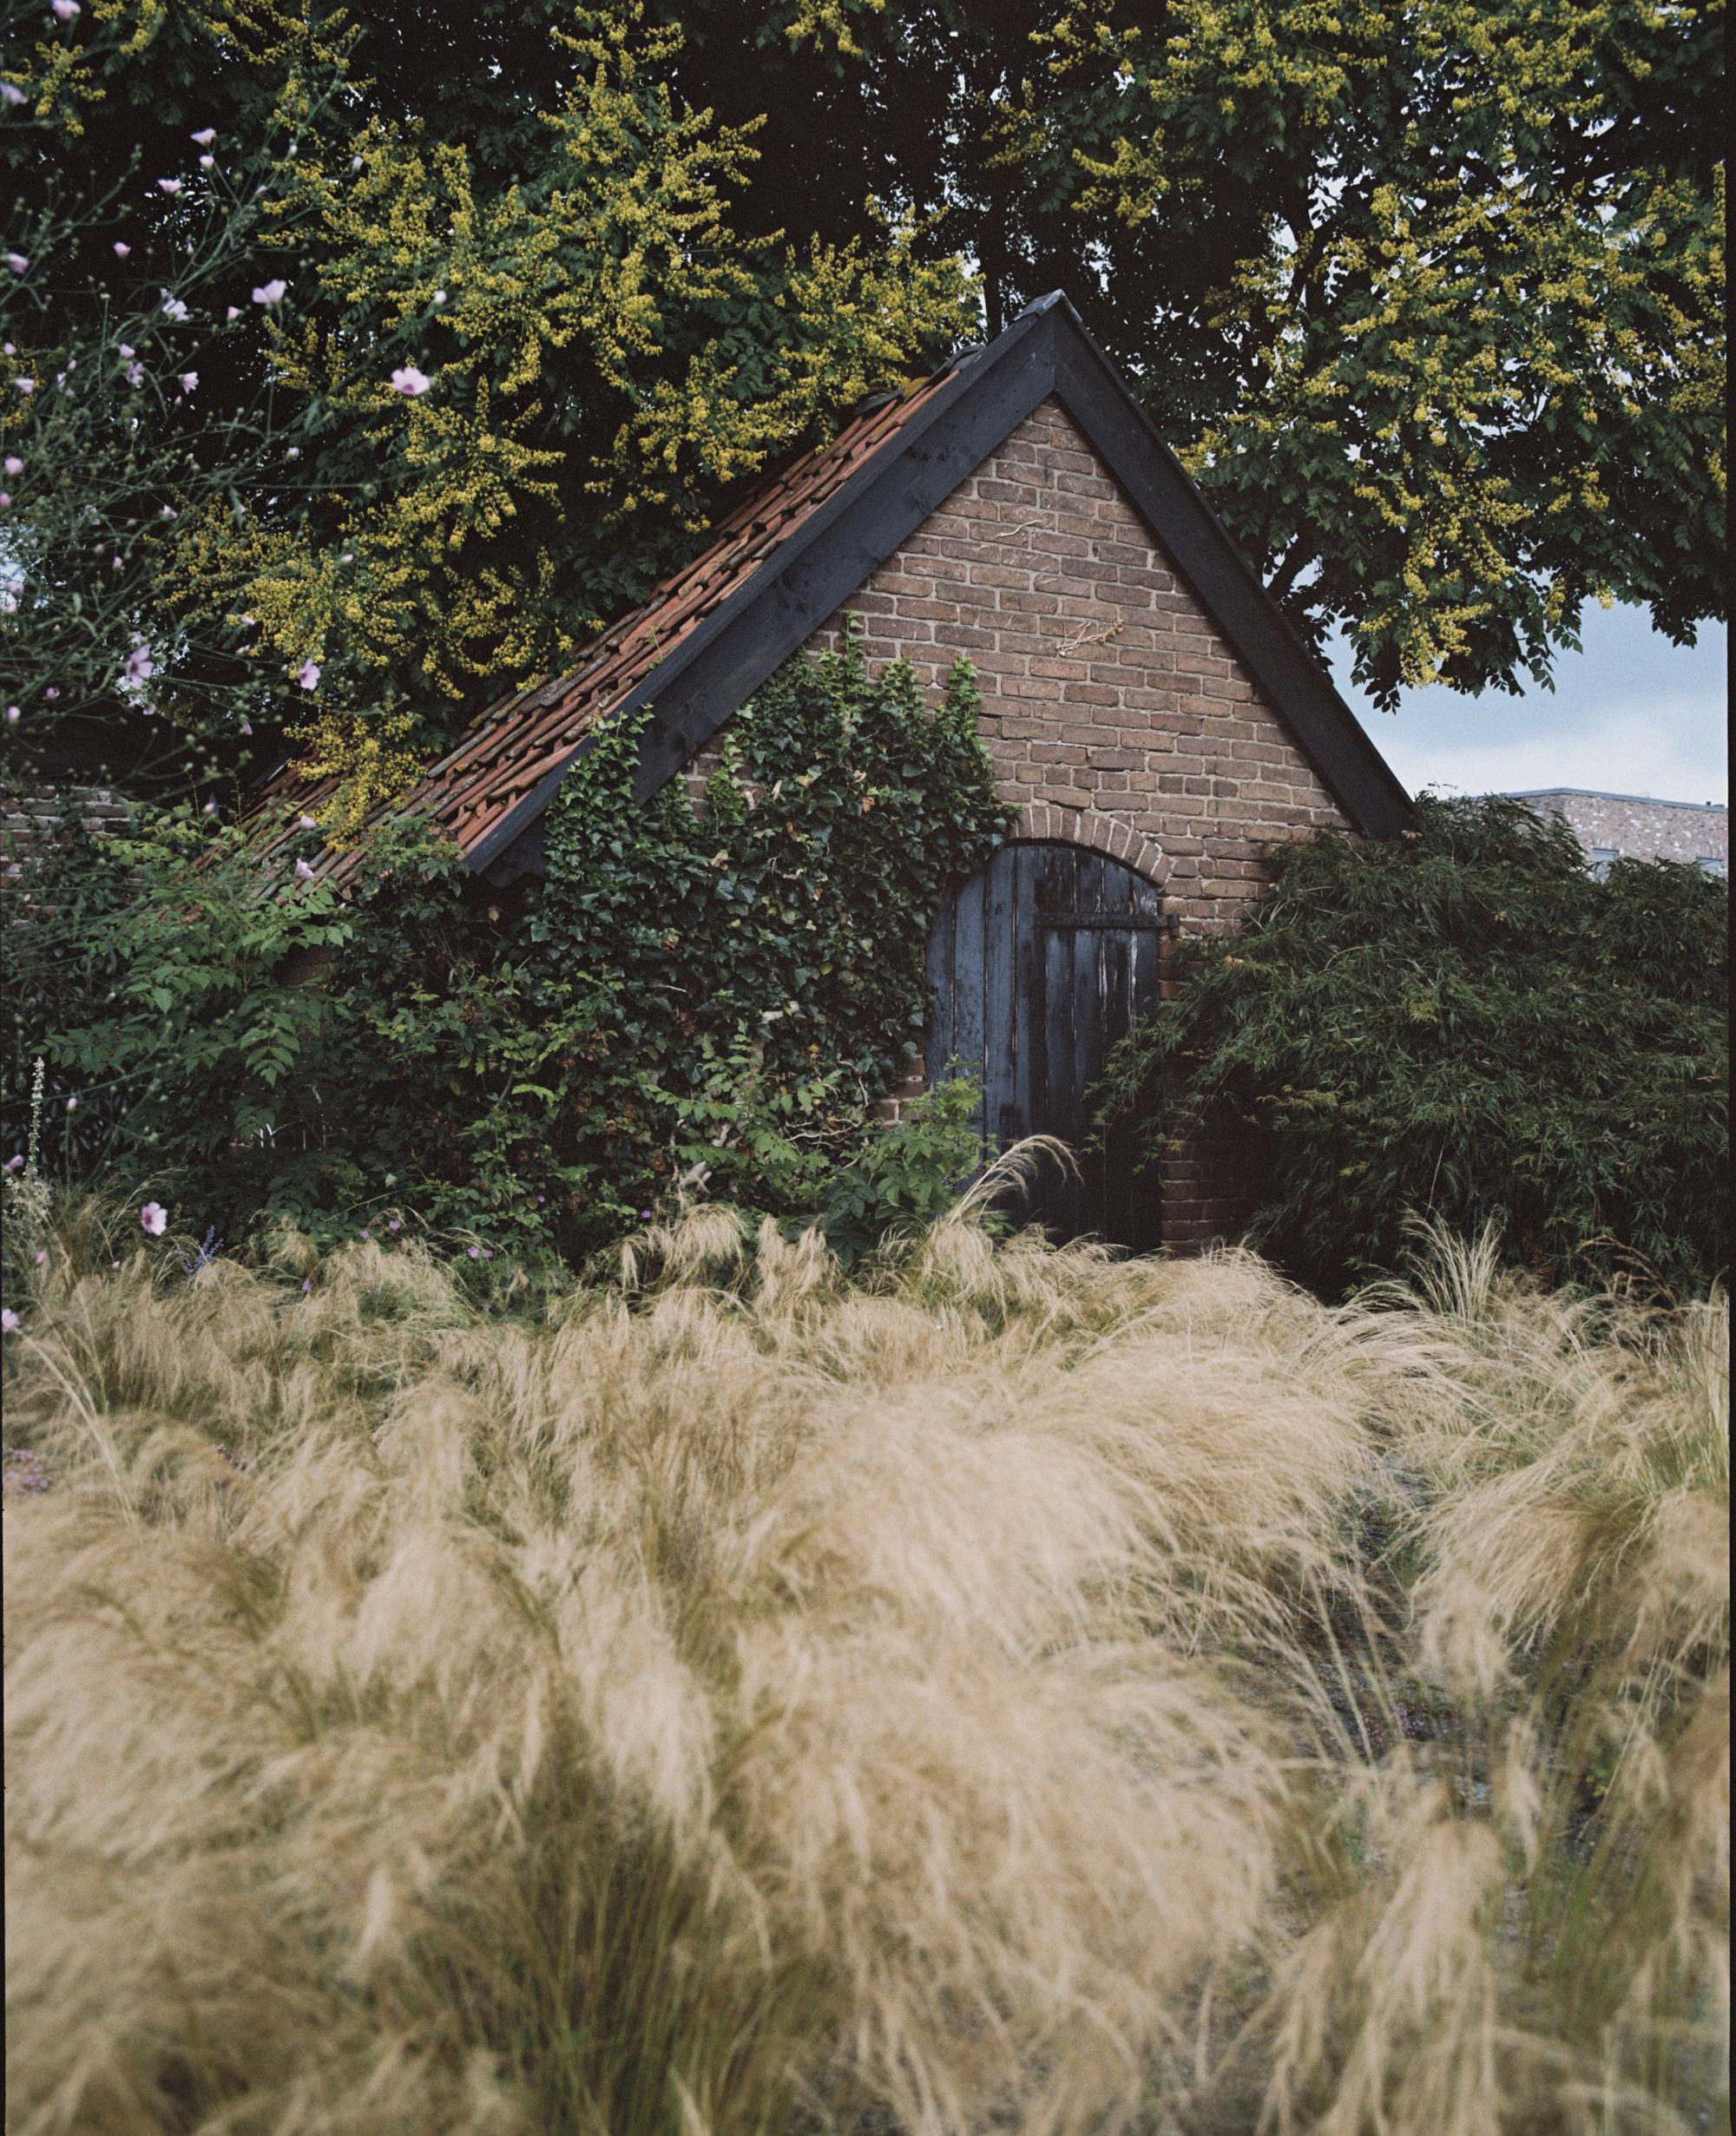 Jardín de la granja Hummelo de Piet Oudolf, en Holanda